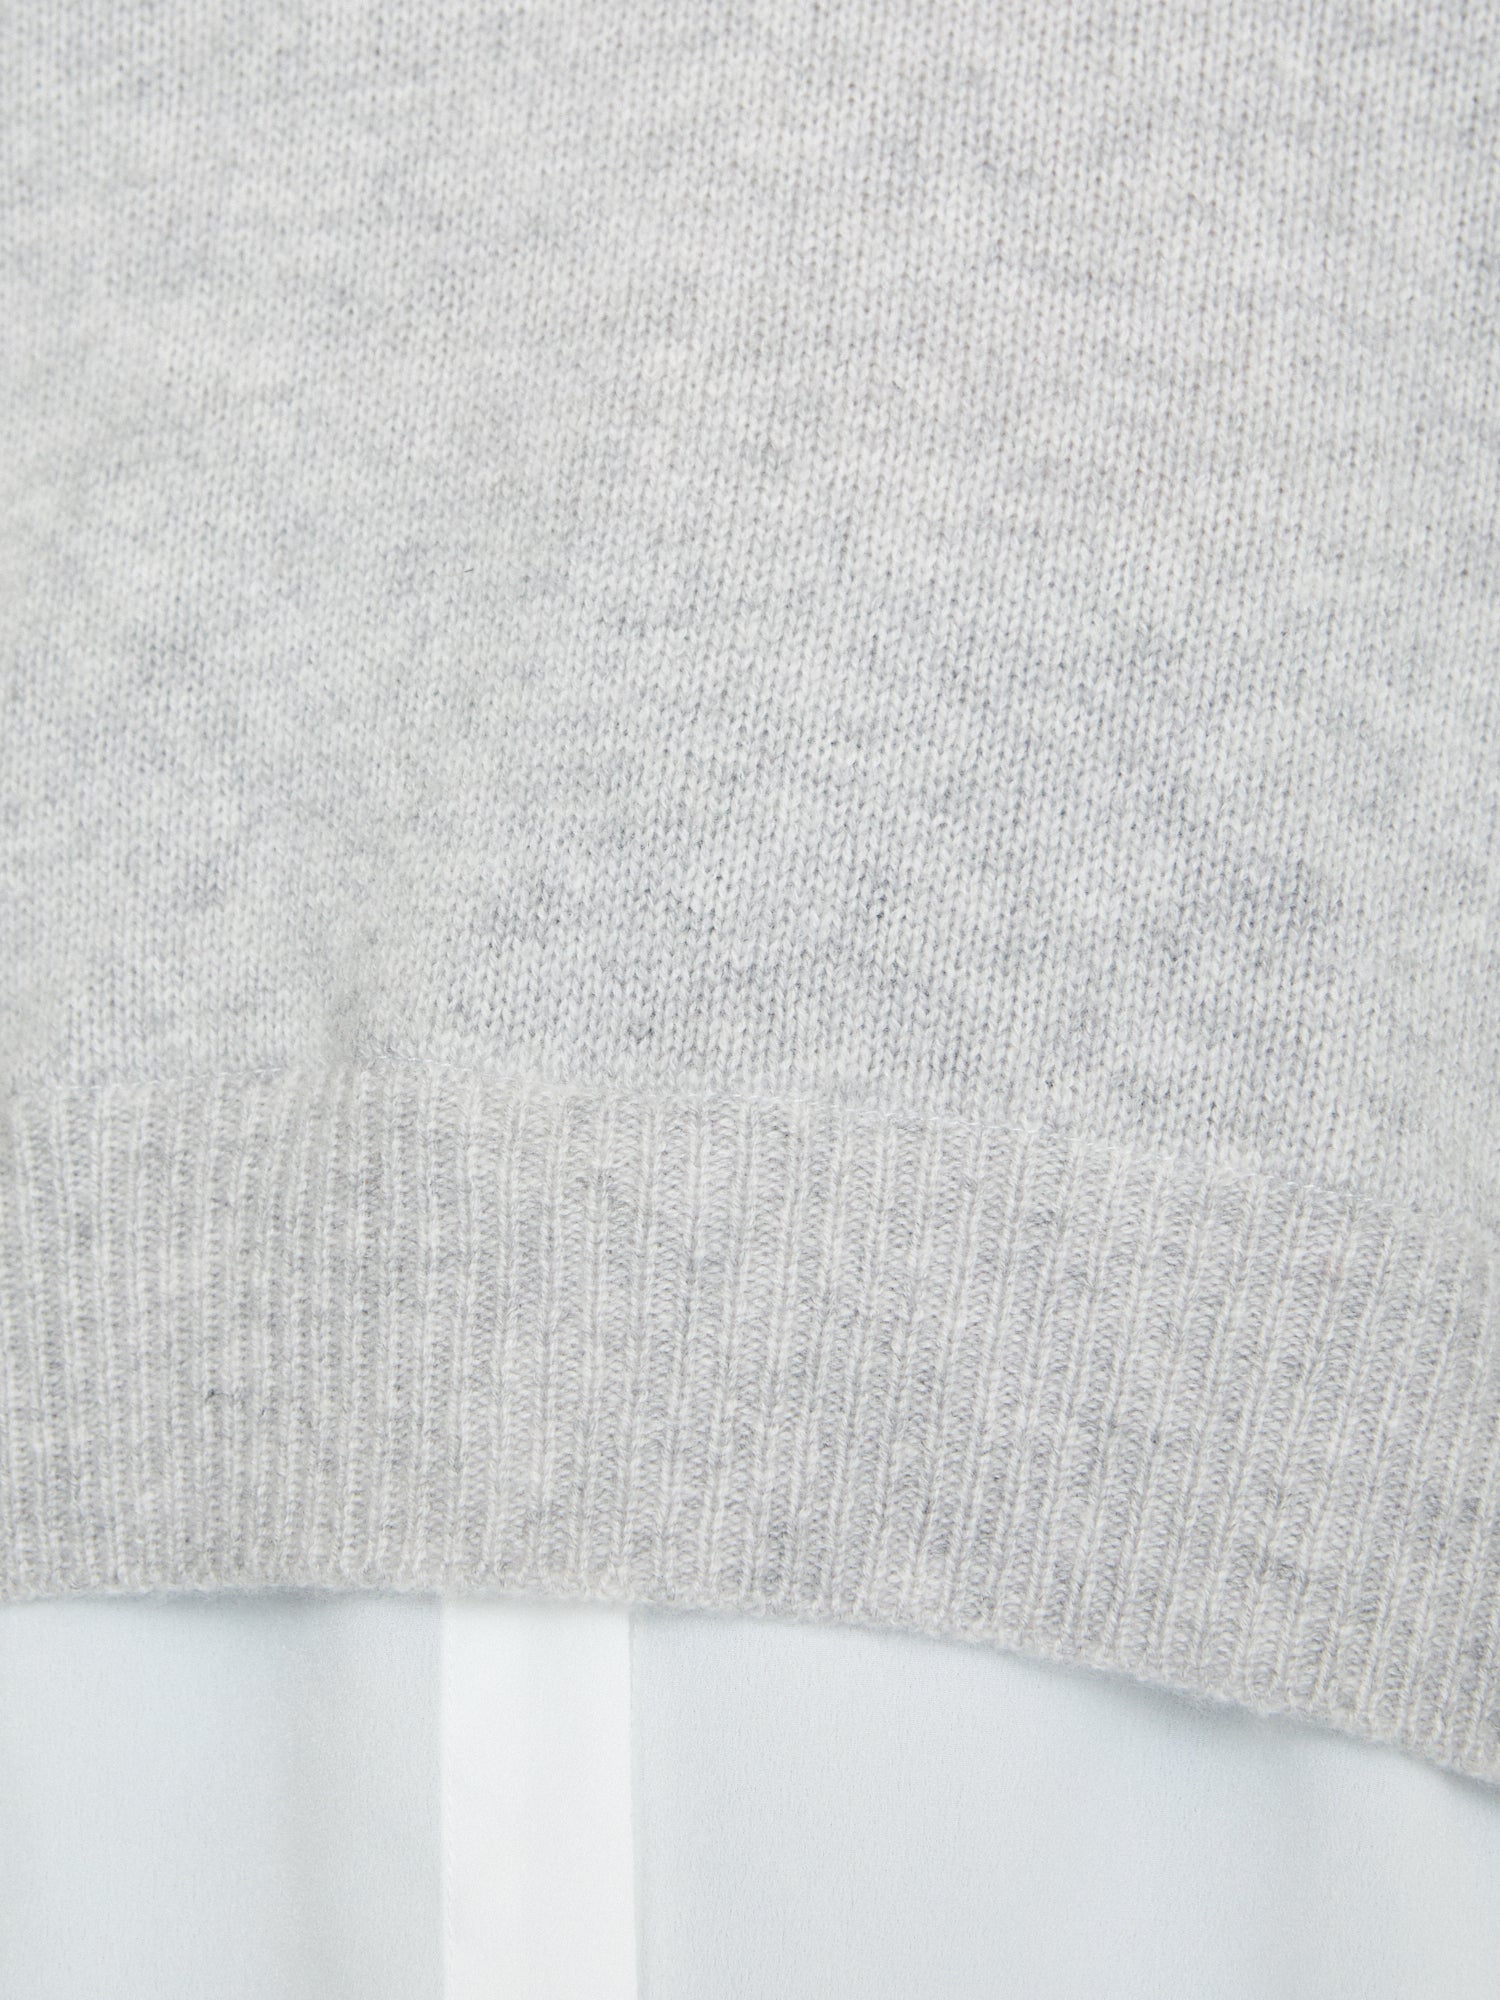 Looker ligth light grey layered v-neck sweater close up